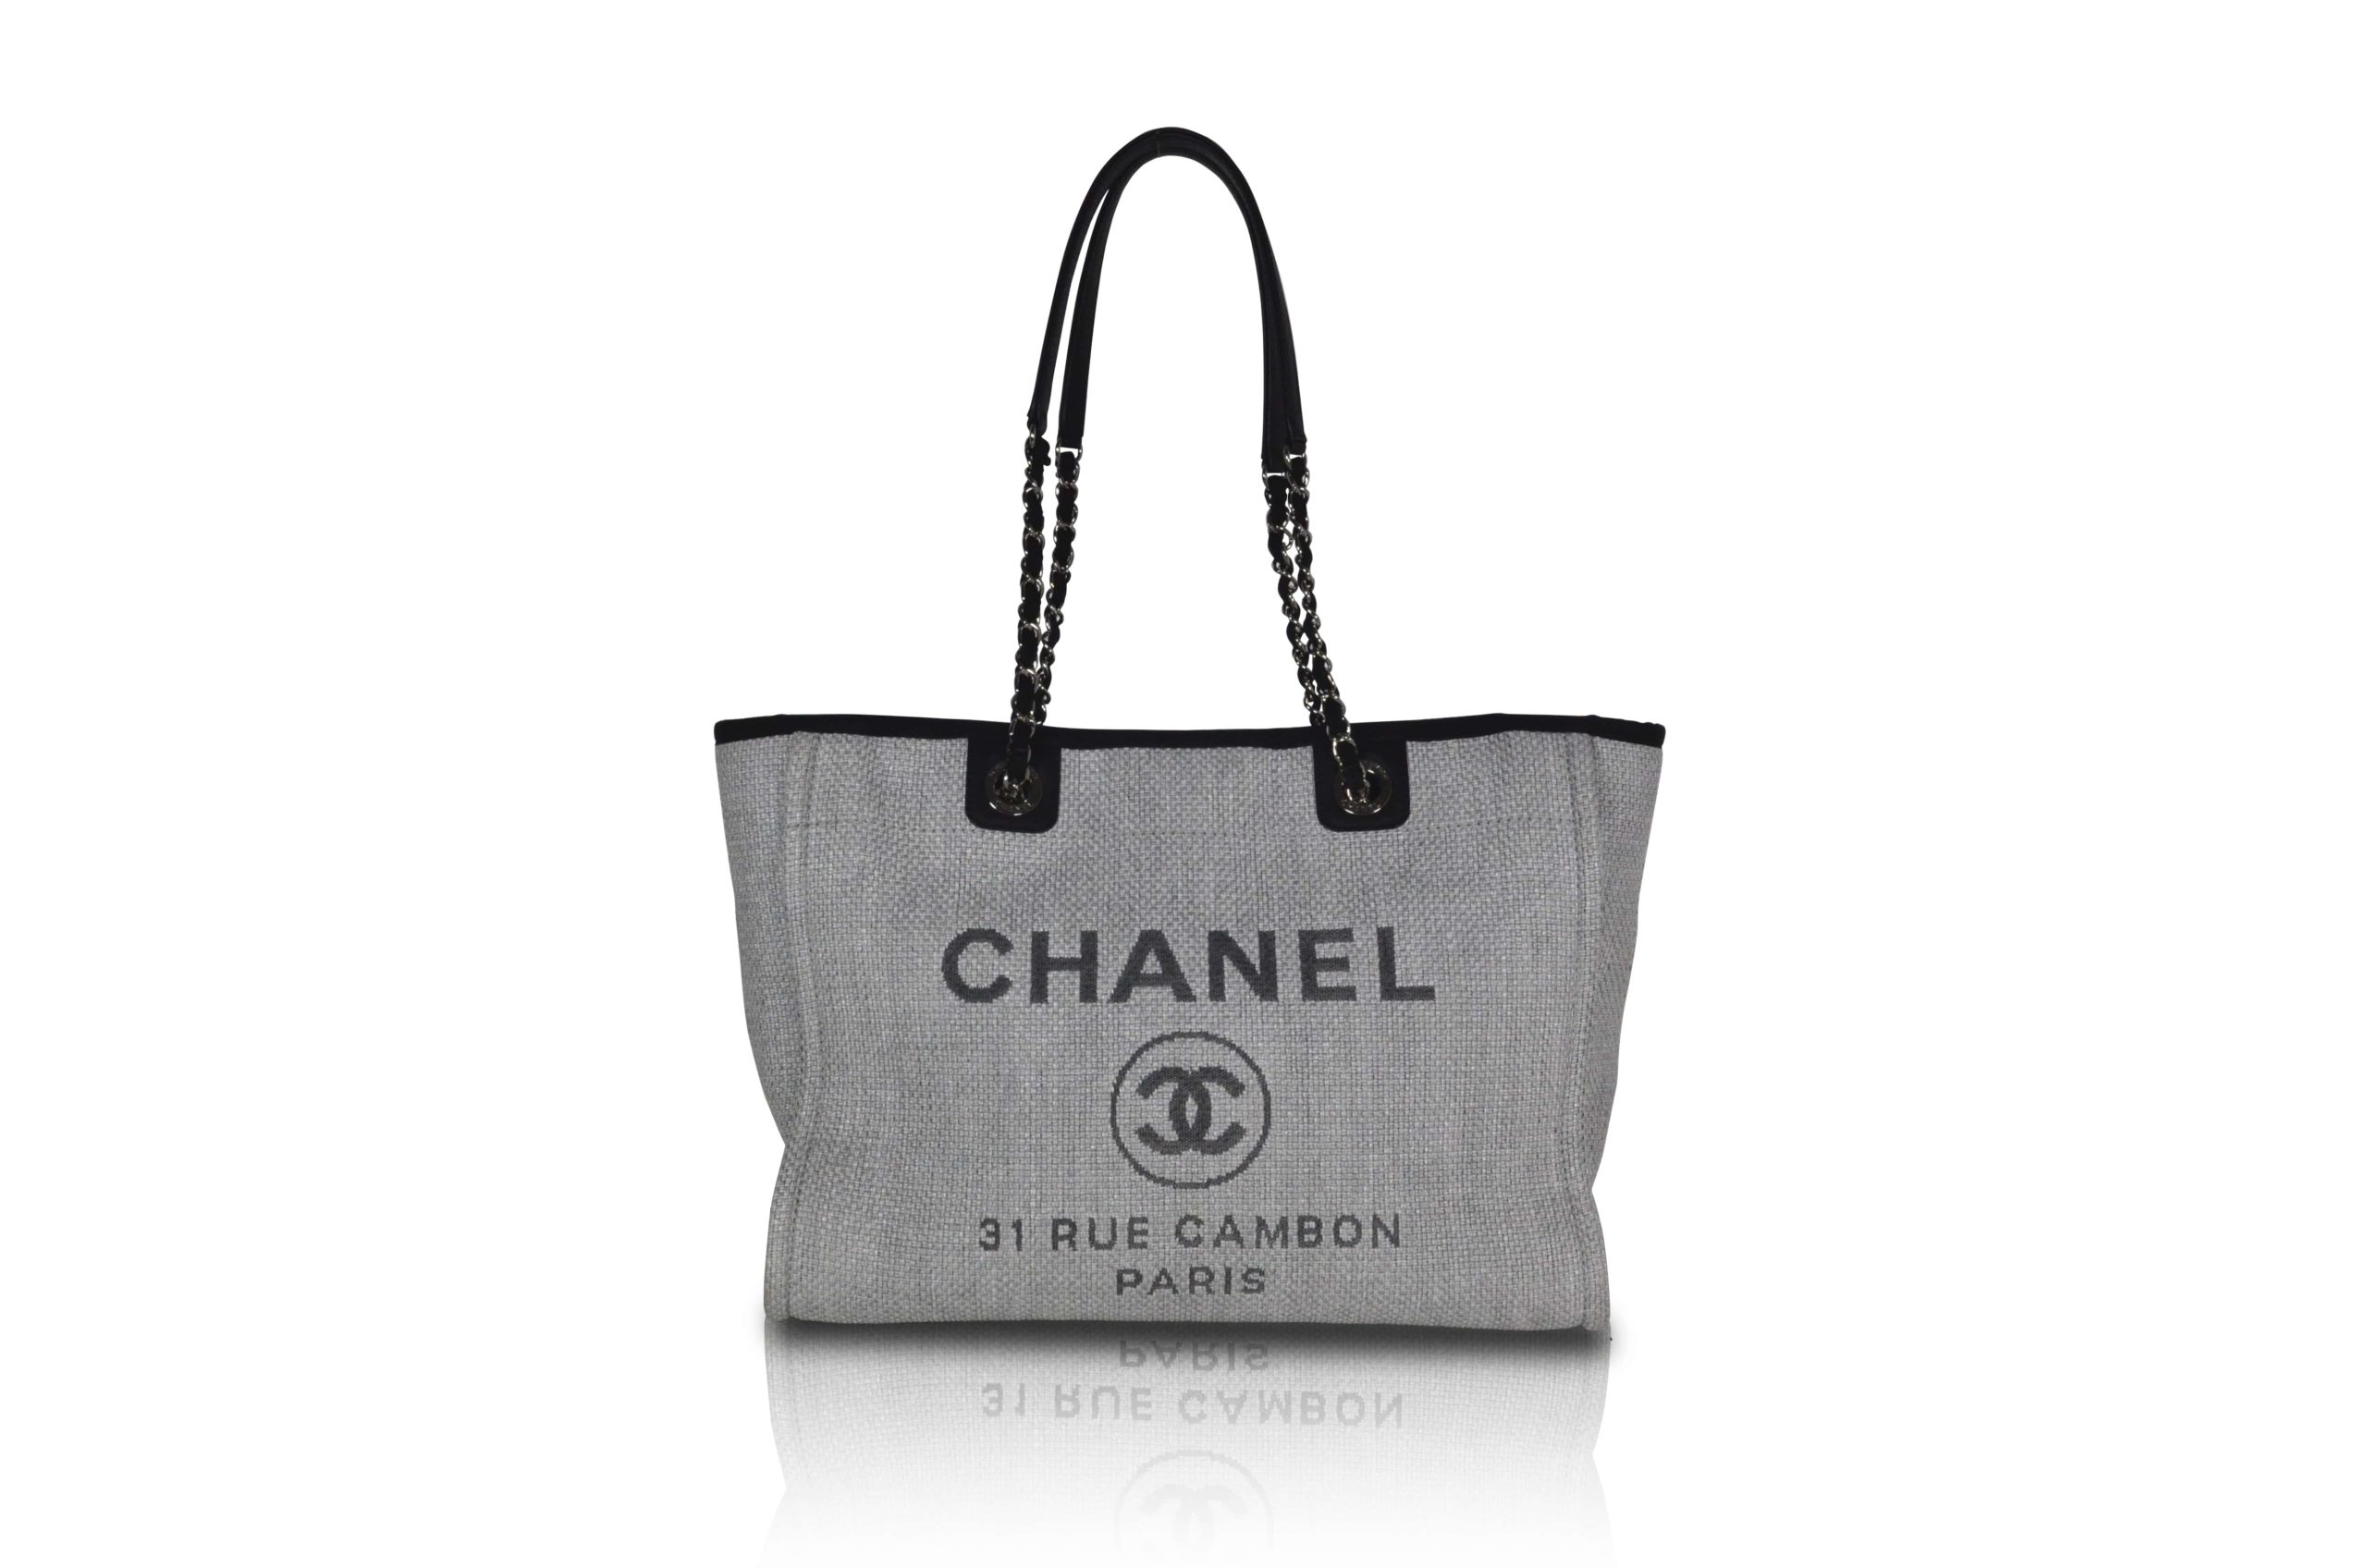 Chanel Deauville 31 Rue Cambon Shopper – EM CHANGE Boutique: pre-loved bags